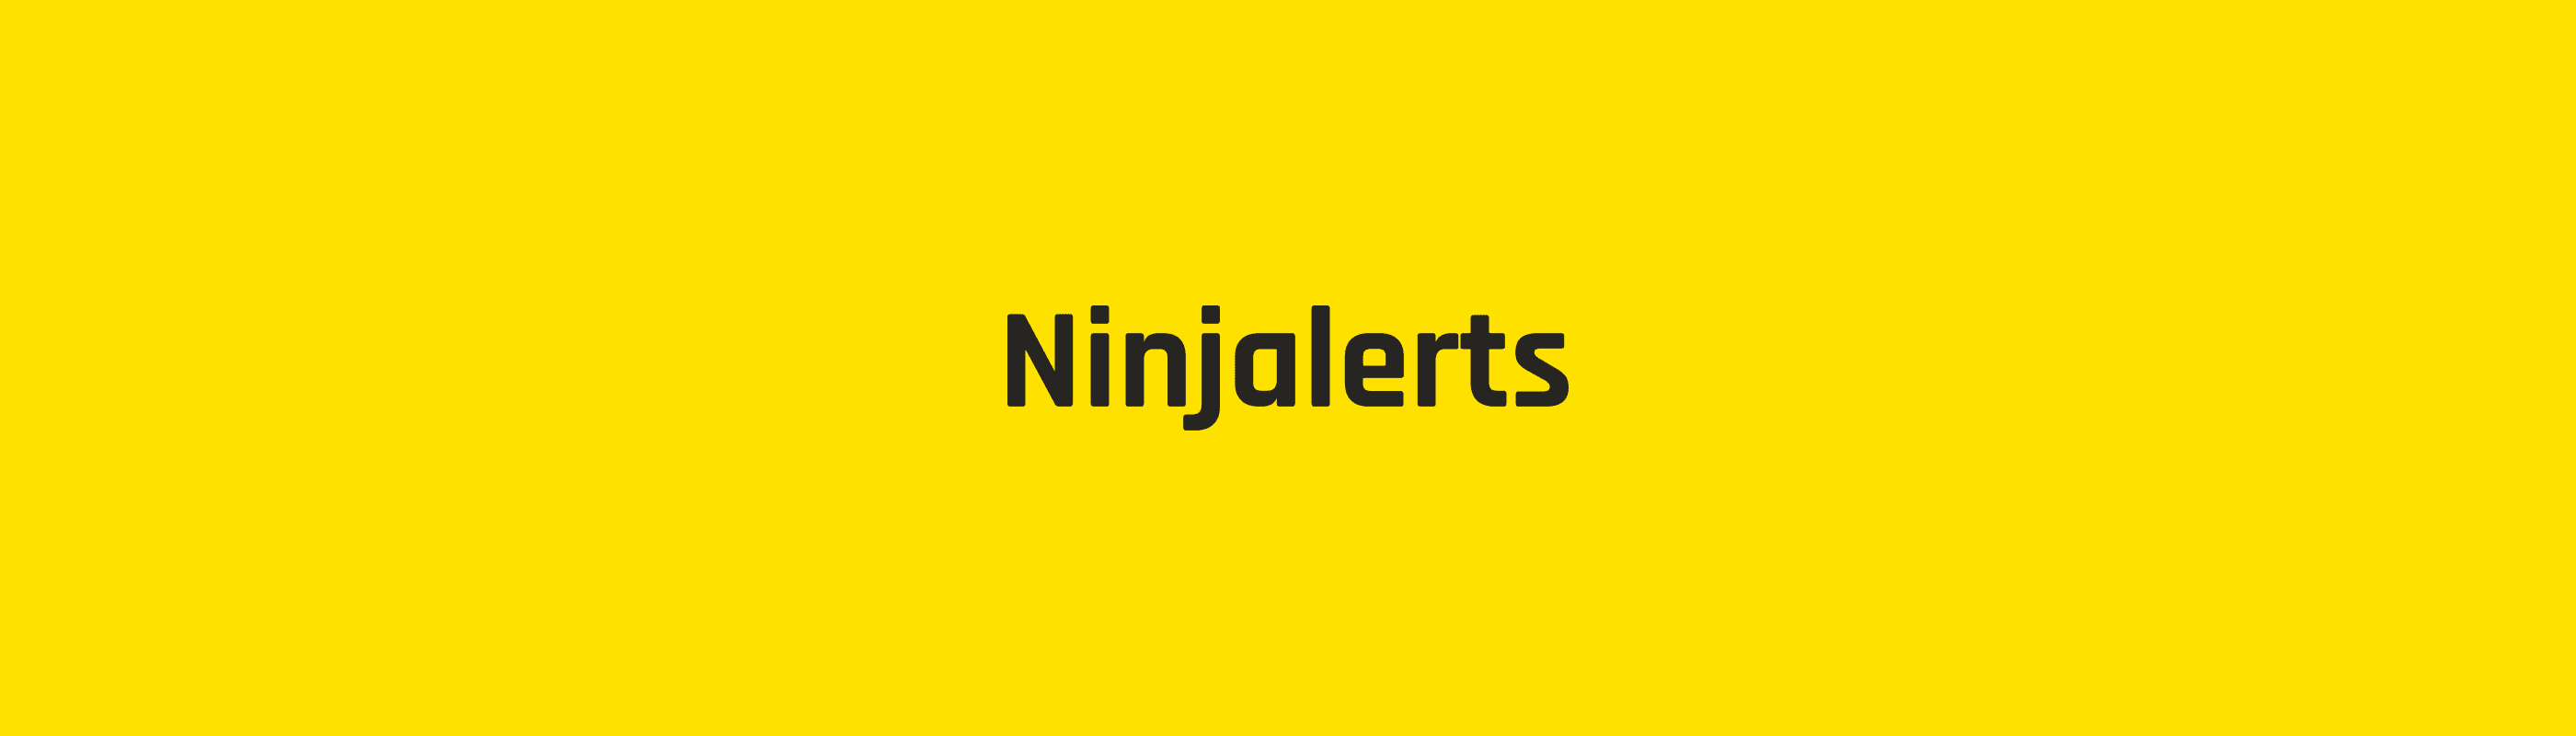 Ninjalerts banner